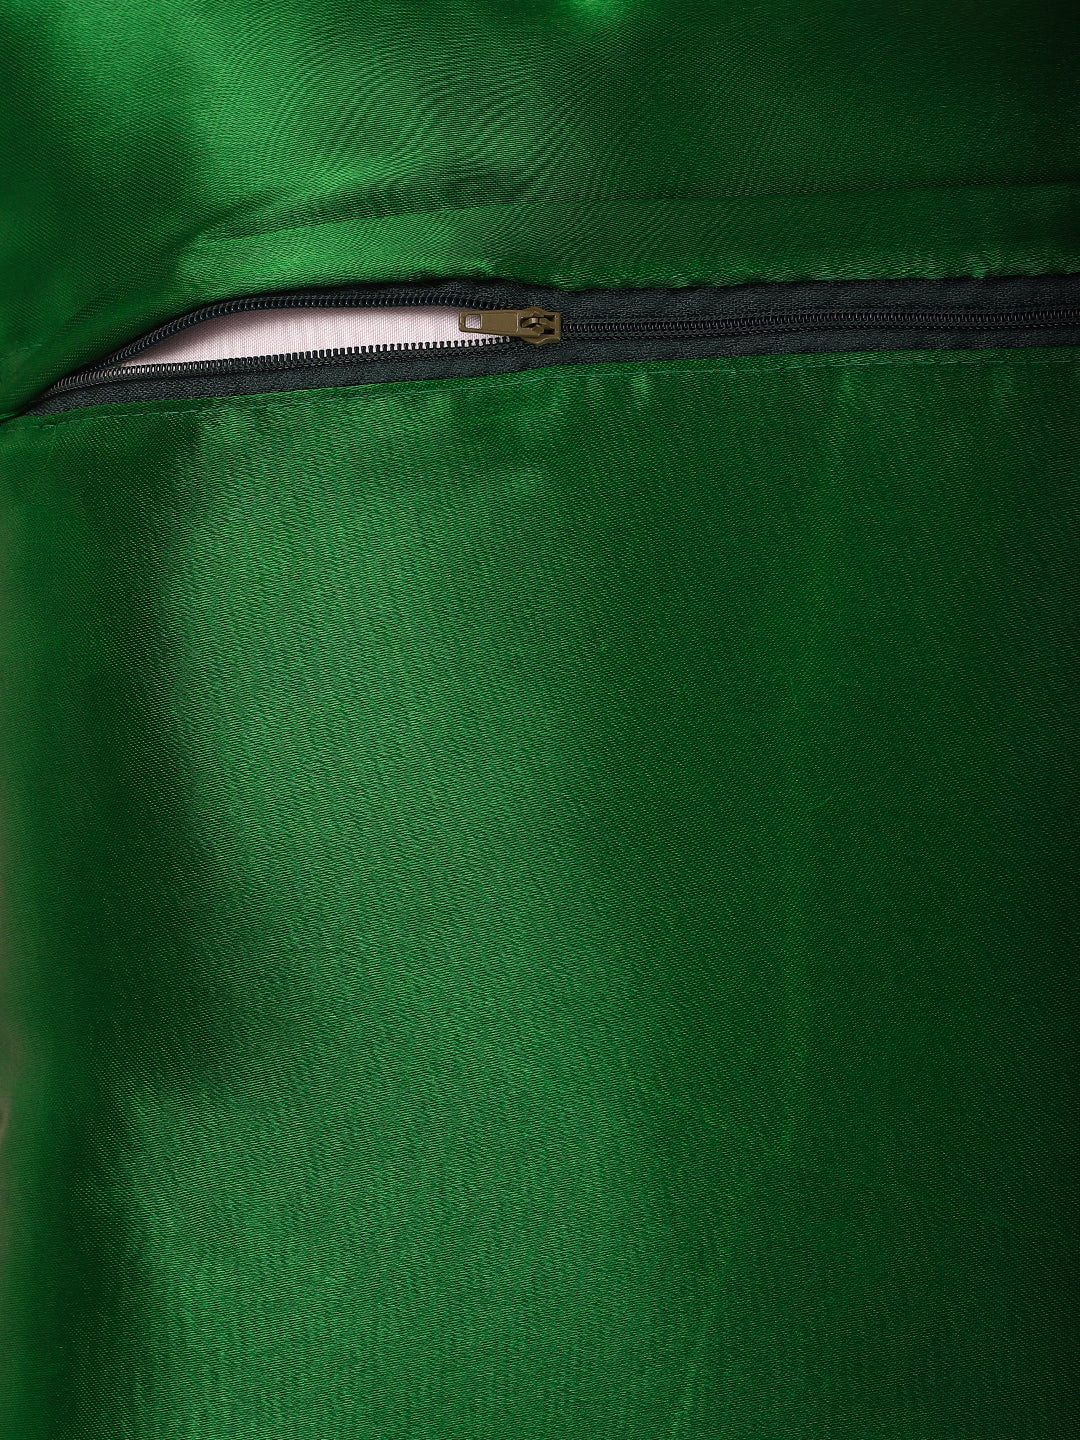 Silkfab Set 0f 5 Decorative Silk Cushion Covers (16x16) Floral Green - SILKFAB